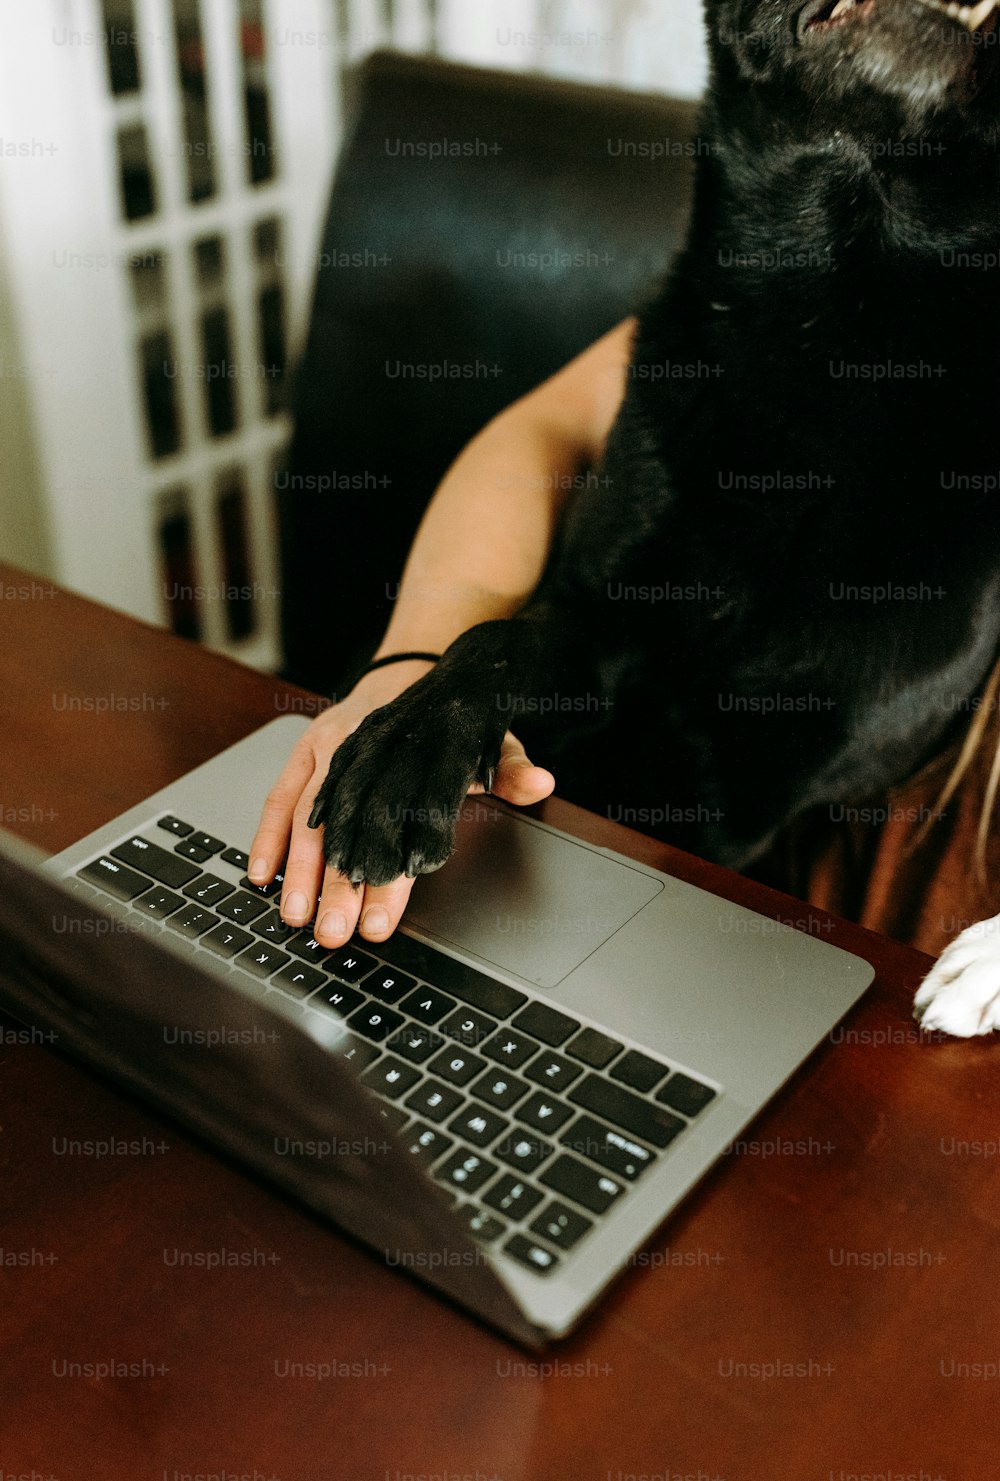 una persona con un cane in grembo usando un laptop